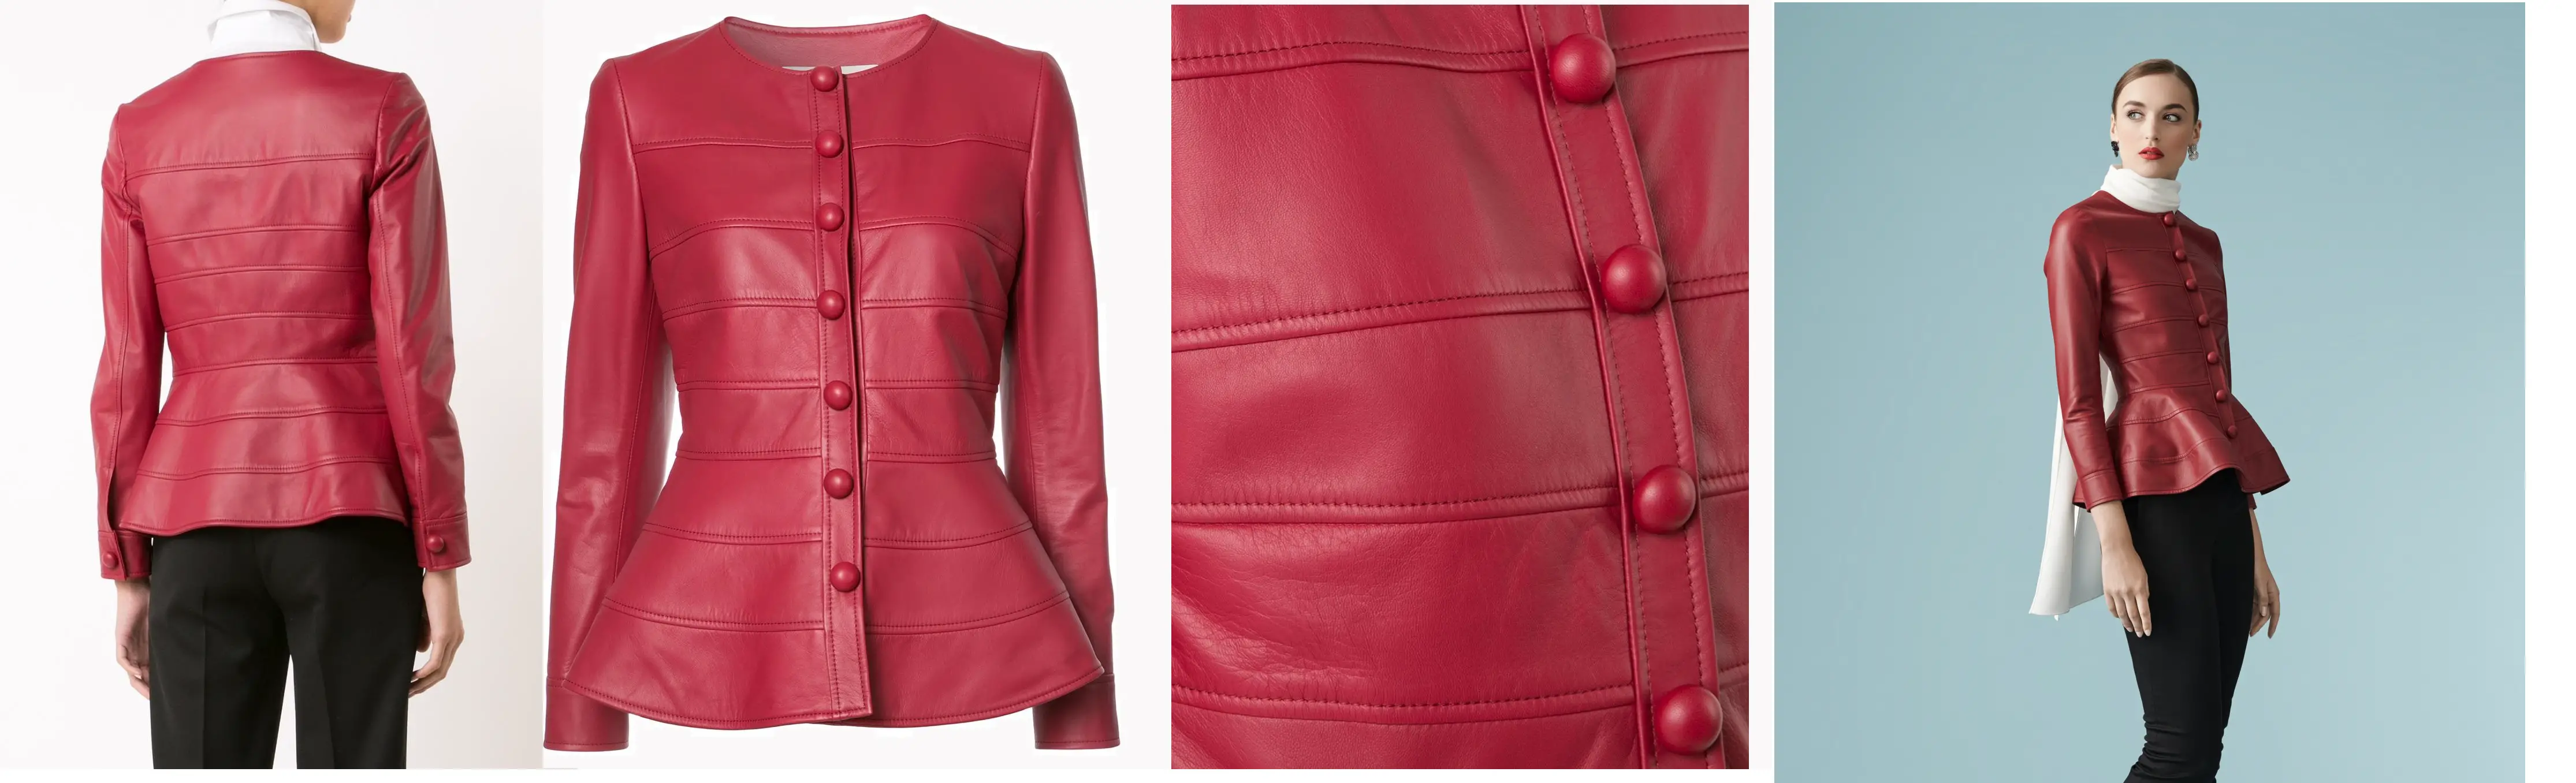 Queen Letizia in Carolina Herrera red peplum leather jacket